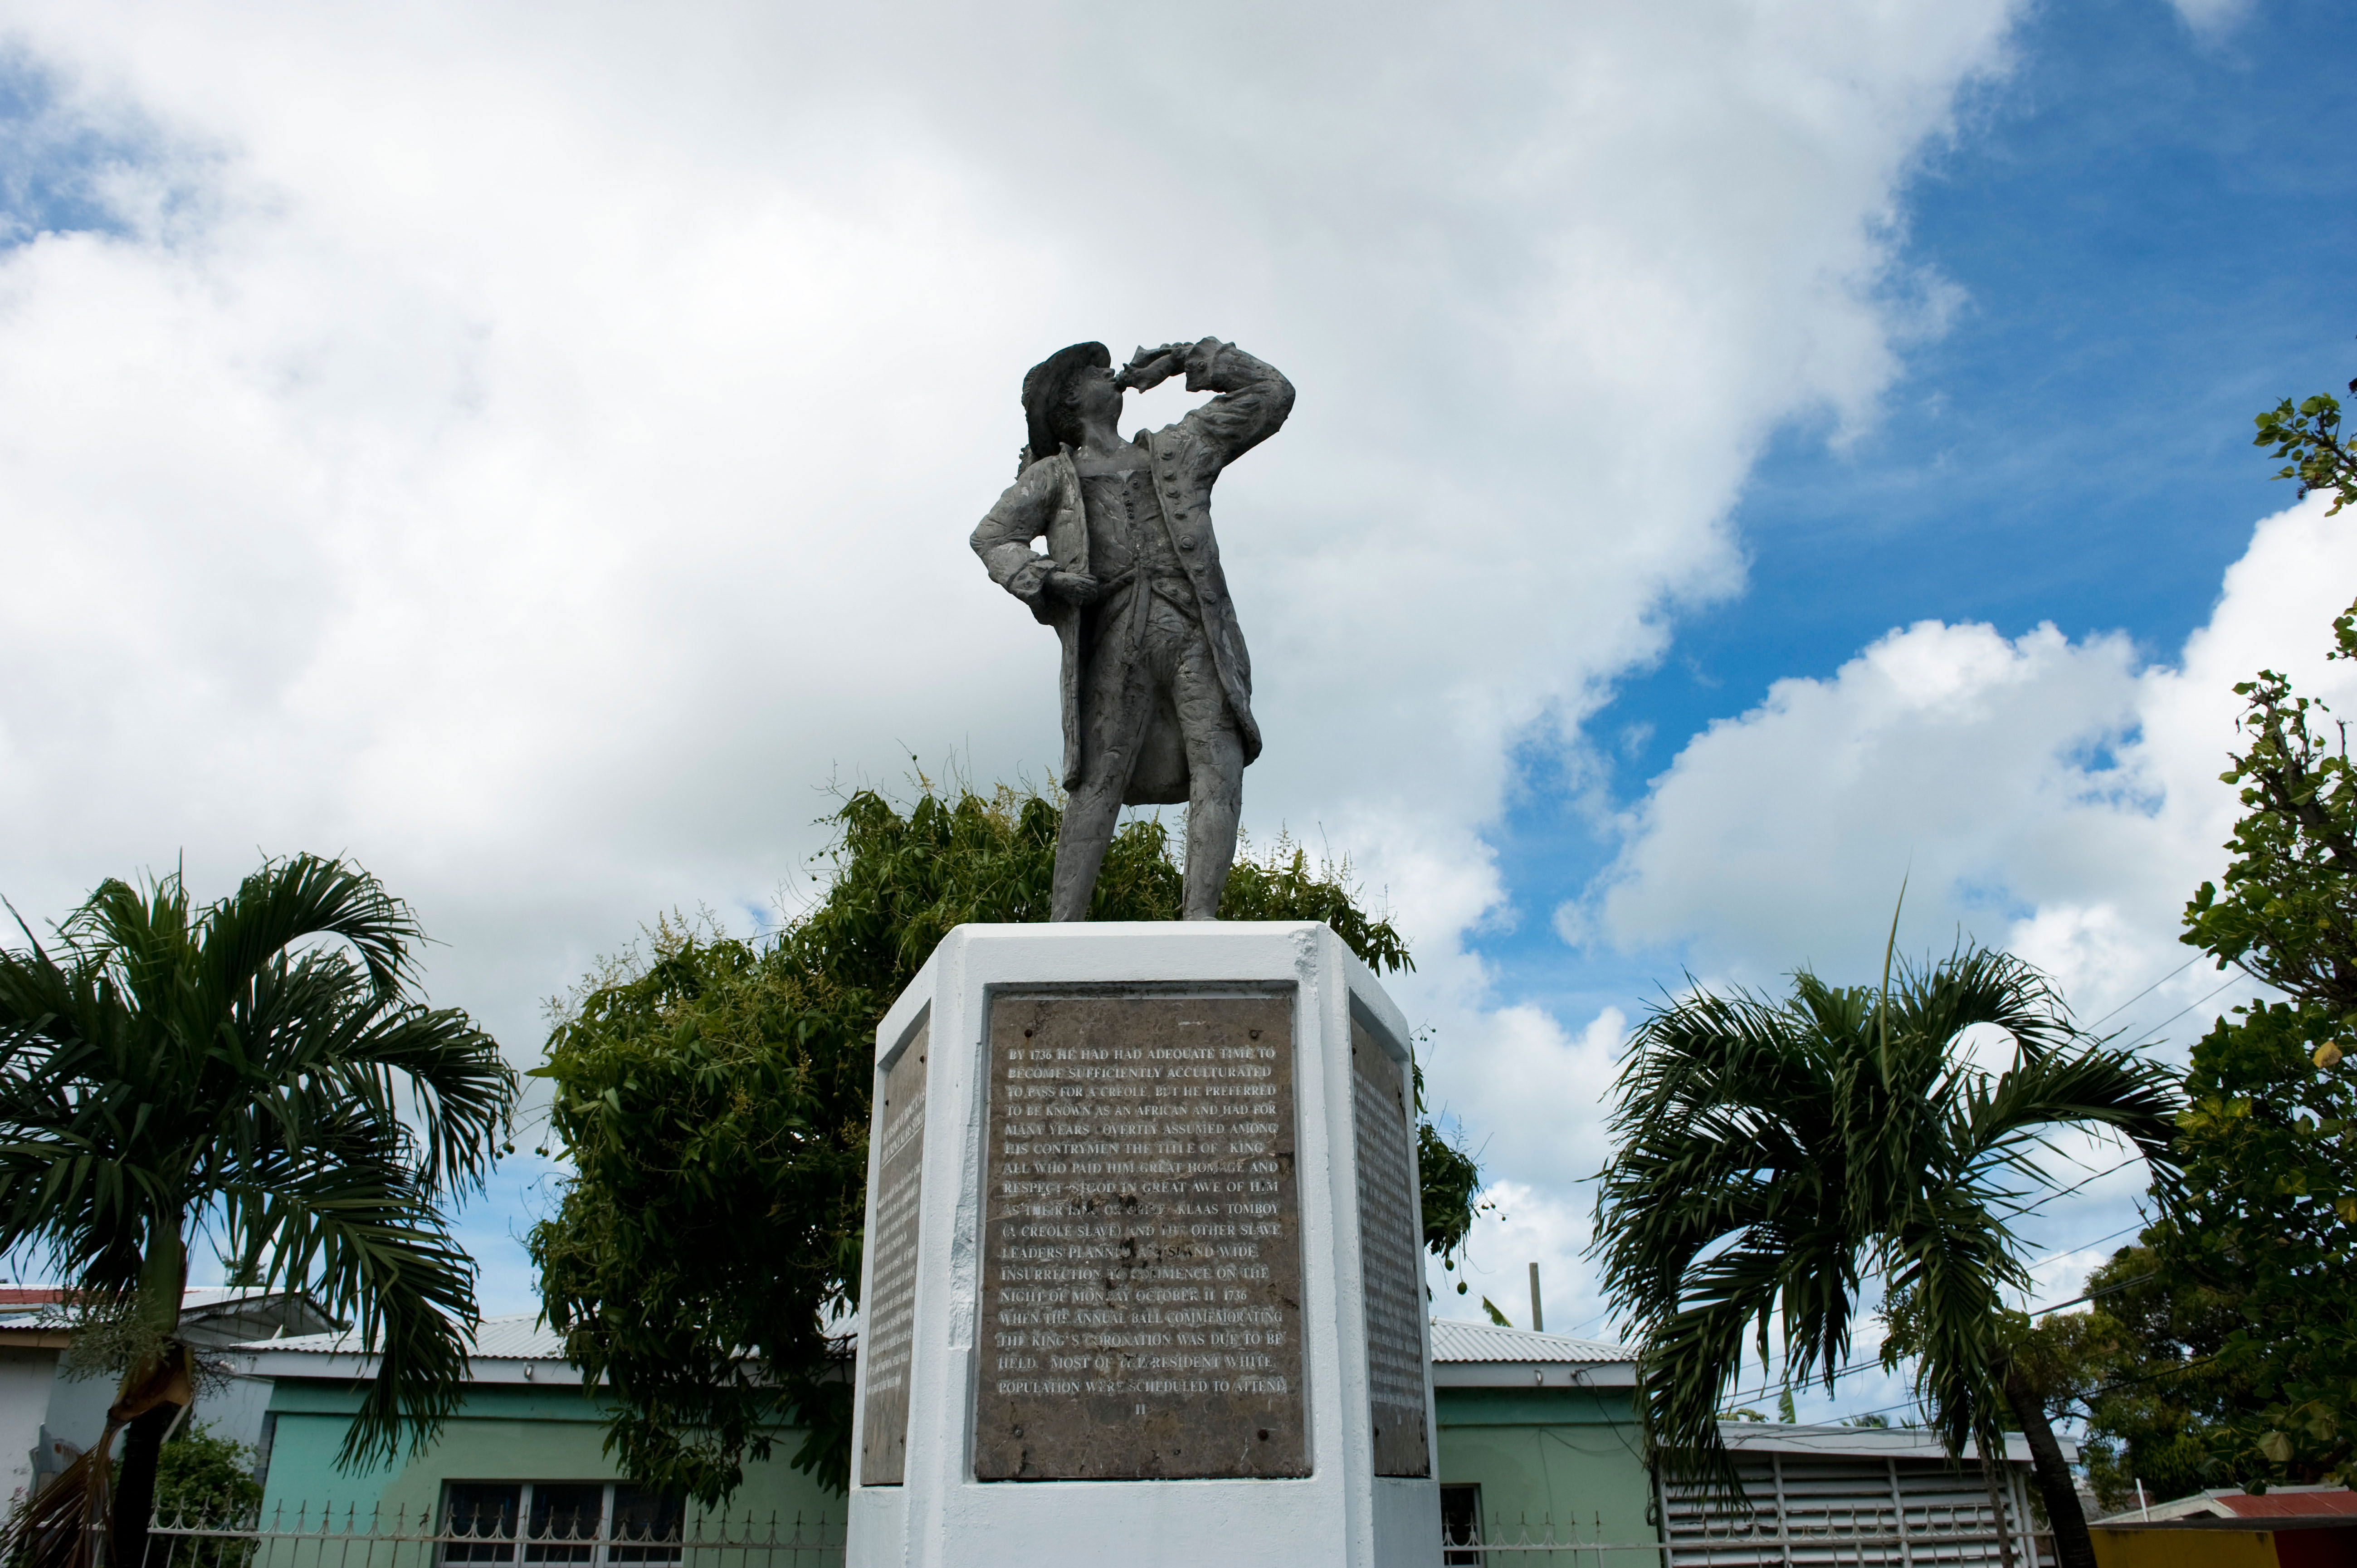 Prince Klass Statue on the Outskirts of St. Johns